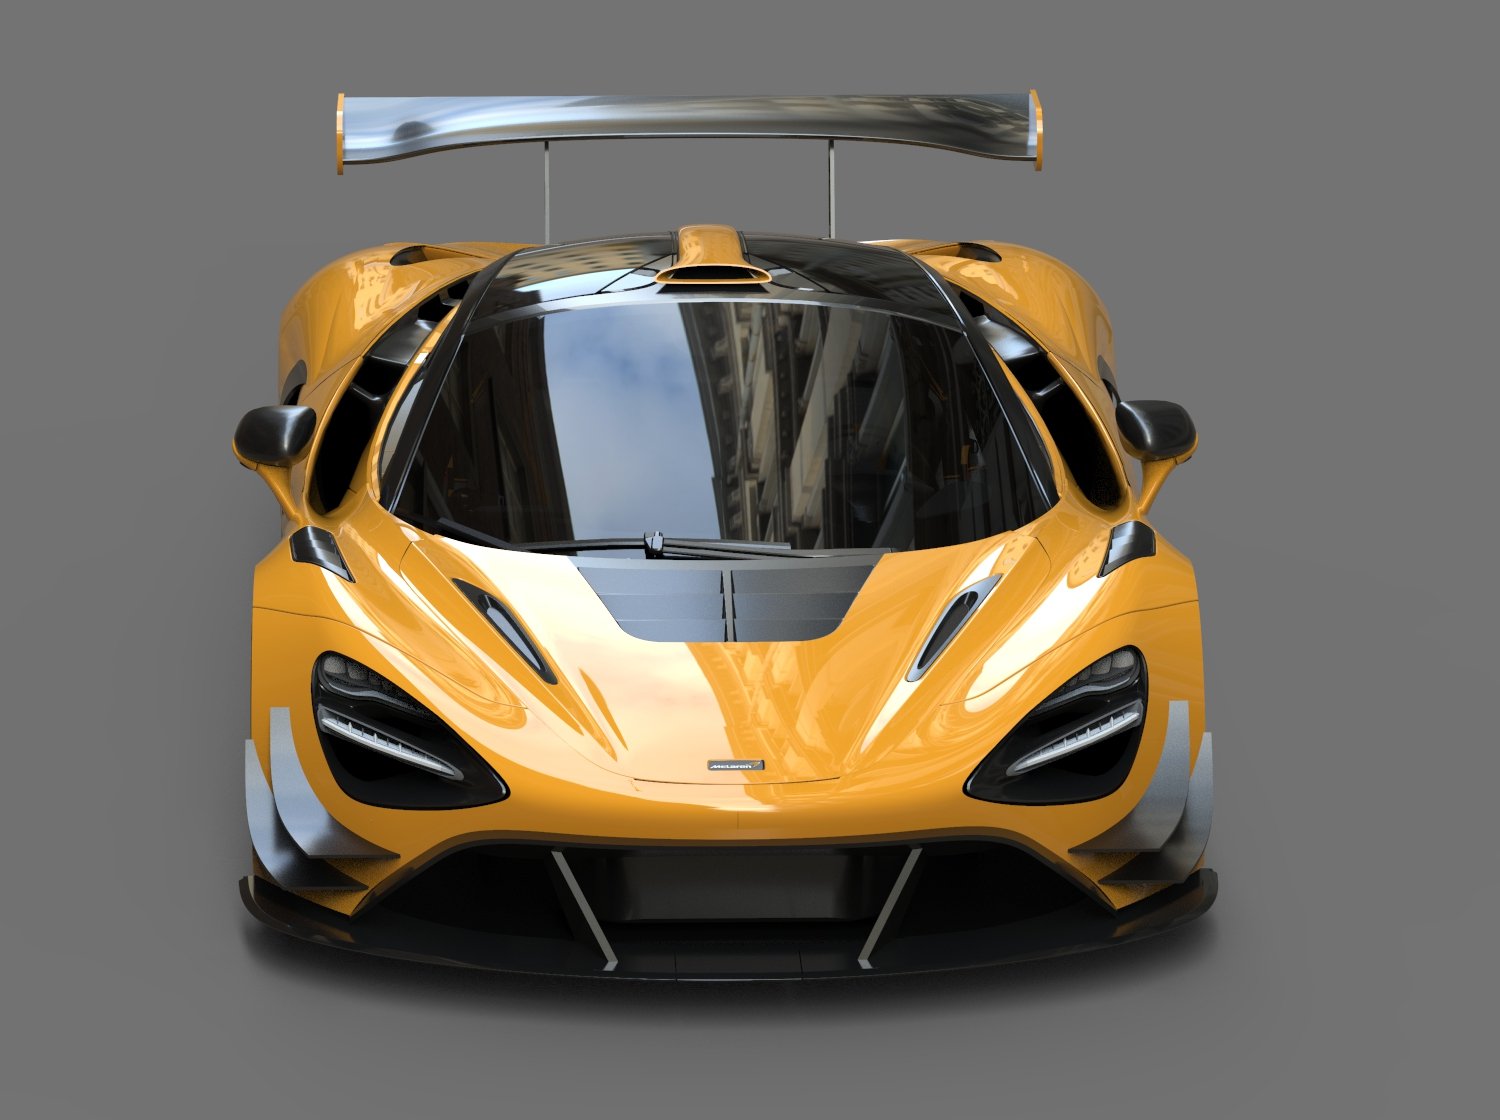 Check price and buy Duke Dynamics Body kit set for McLaren 720s GT3